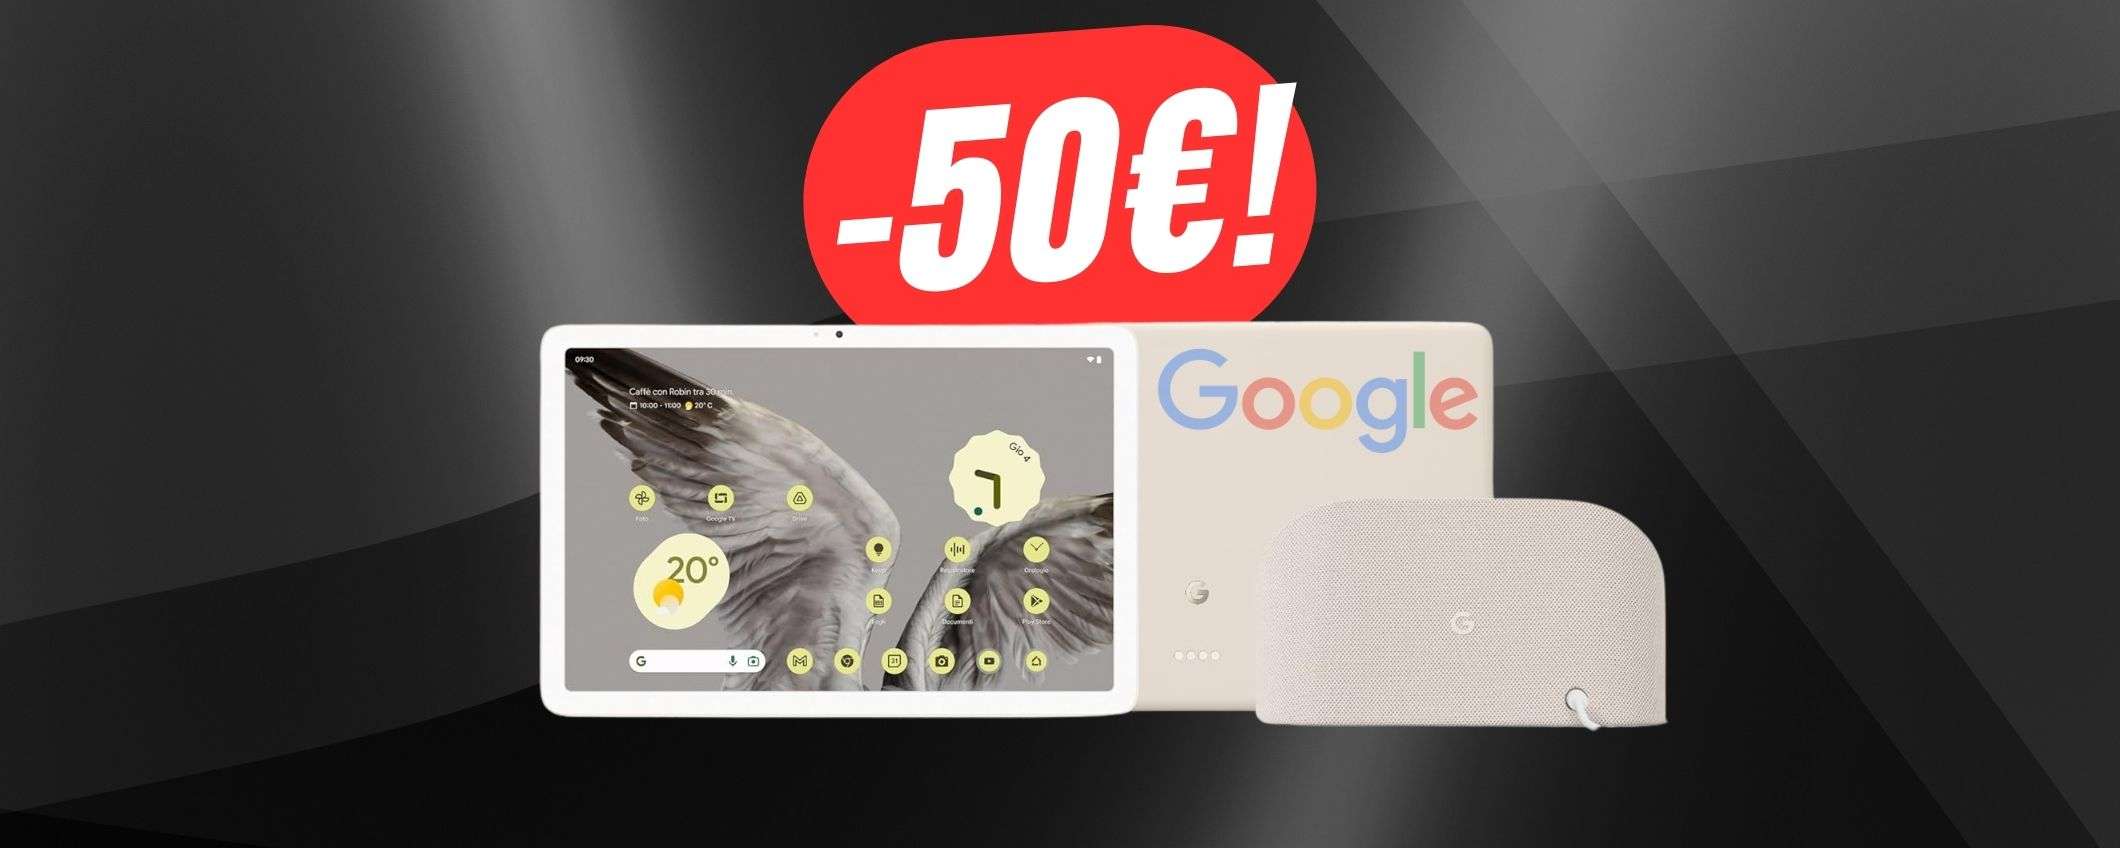 Google Pixel Tablet + base di ricarica: ora a 50€ in meno!